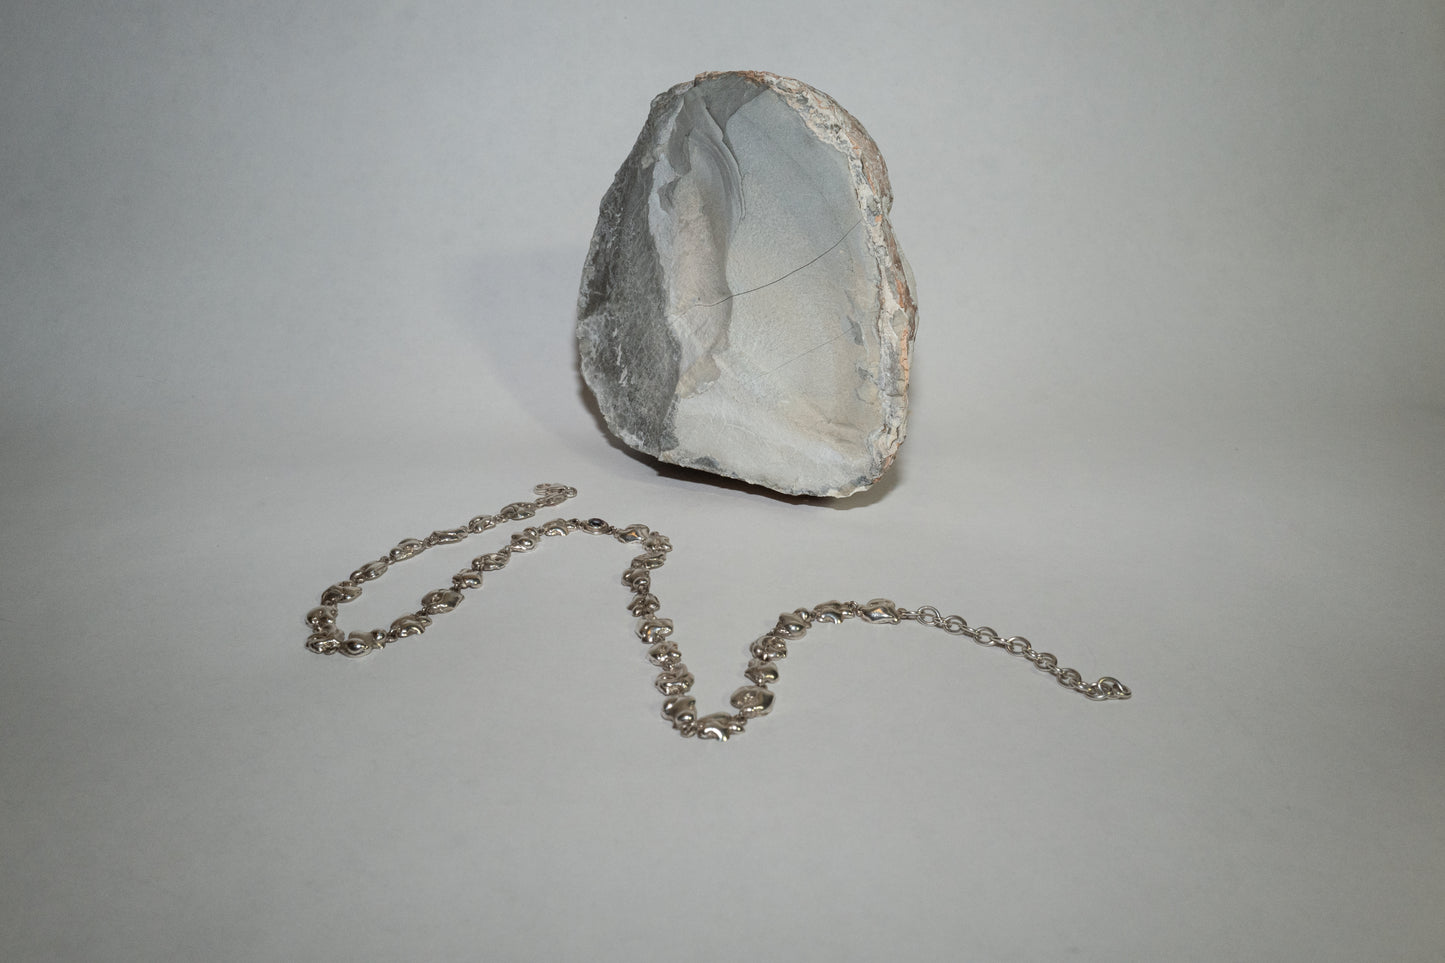 Lava Link Necklace